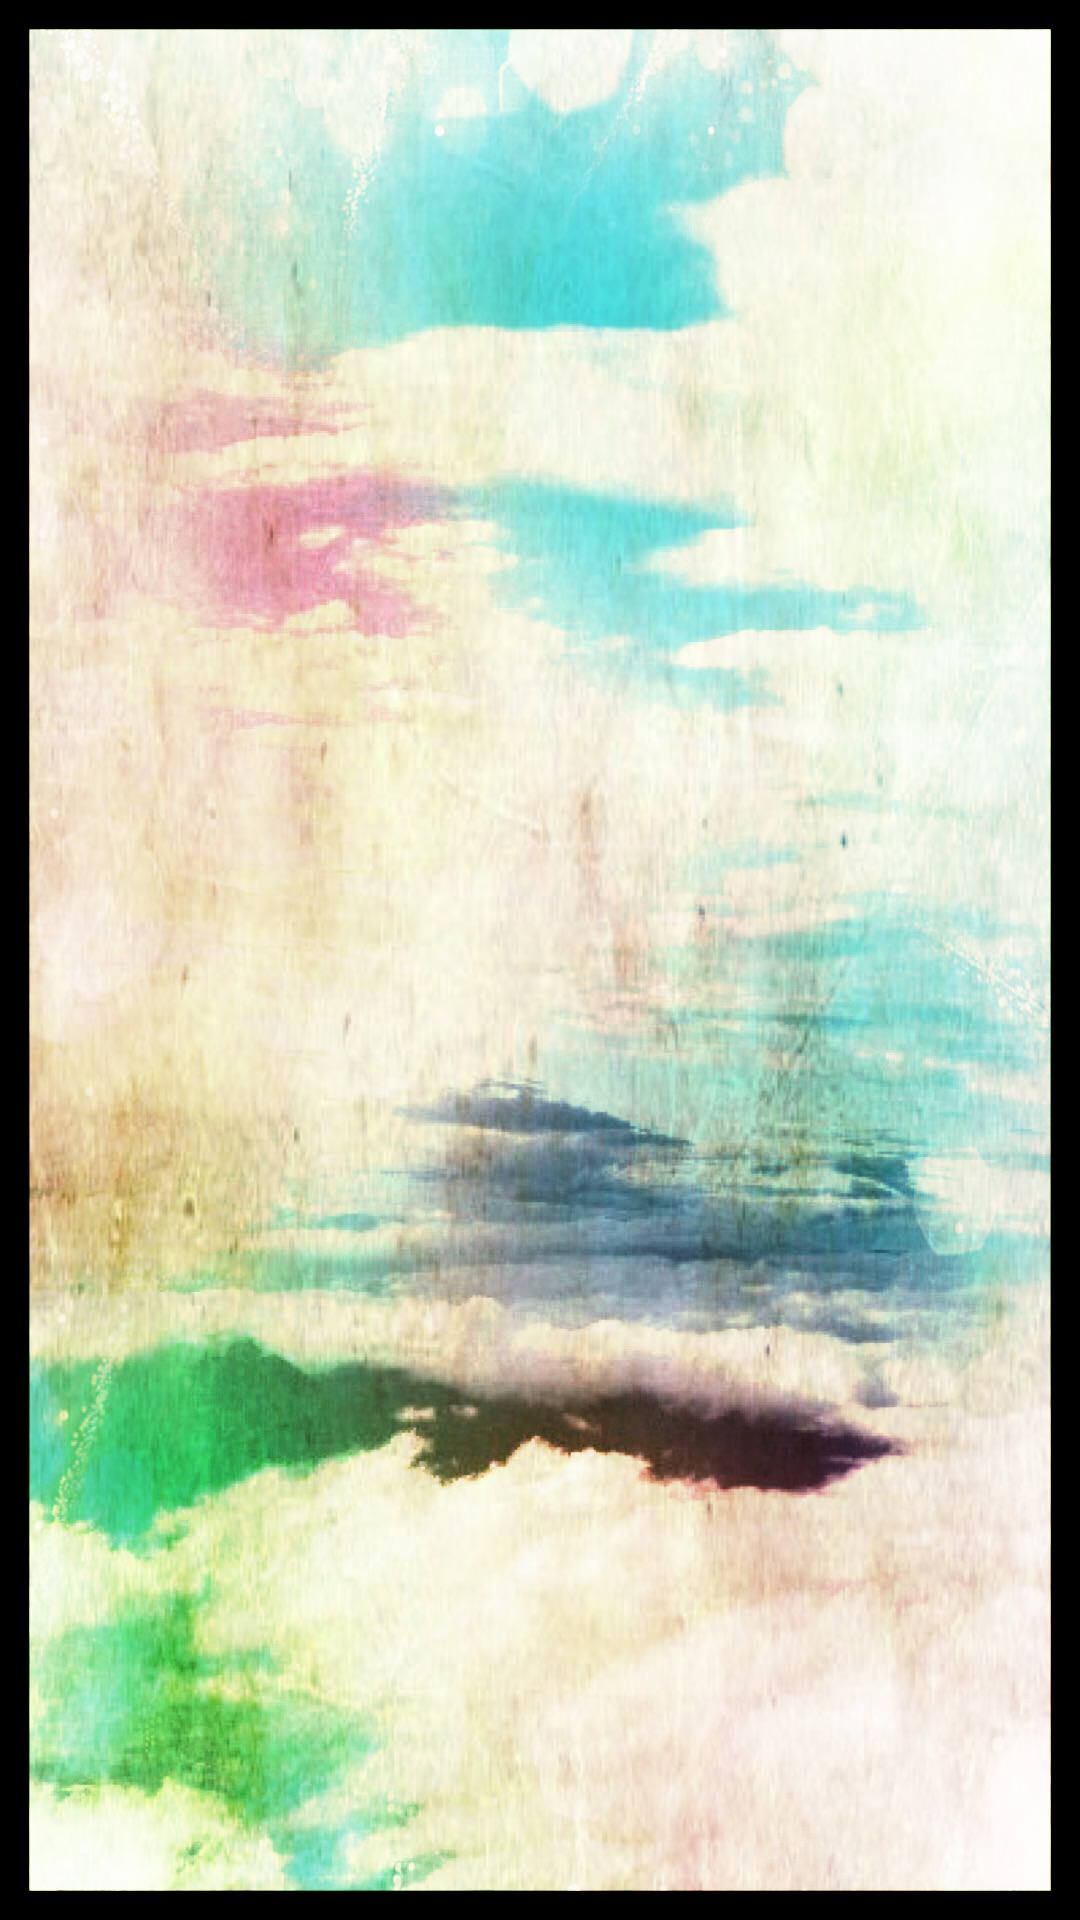 iPhone 7 Plus wallpaper